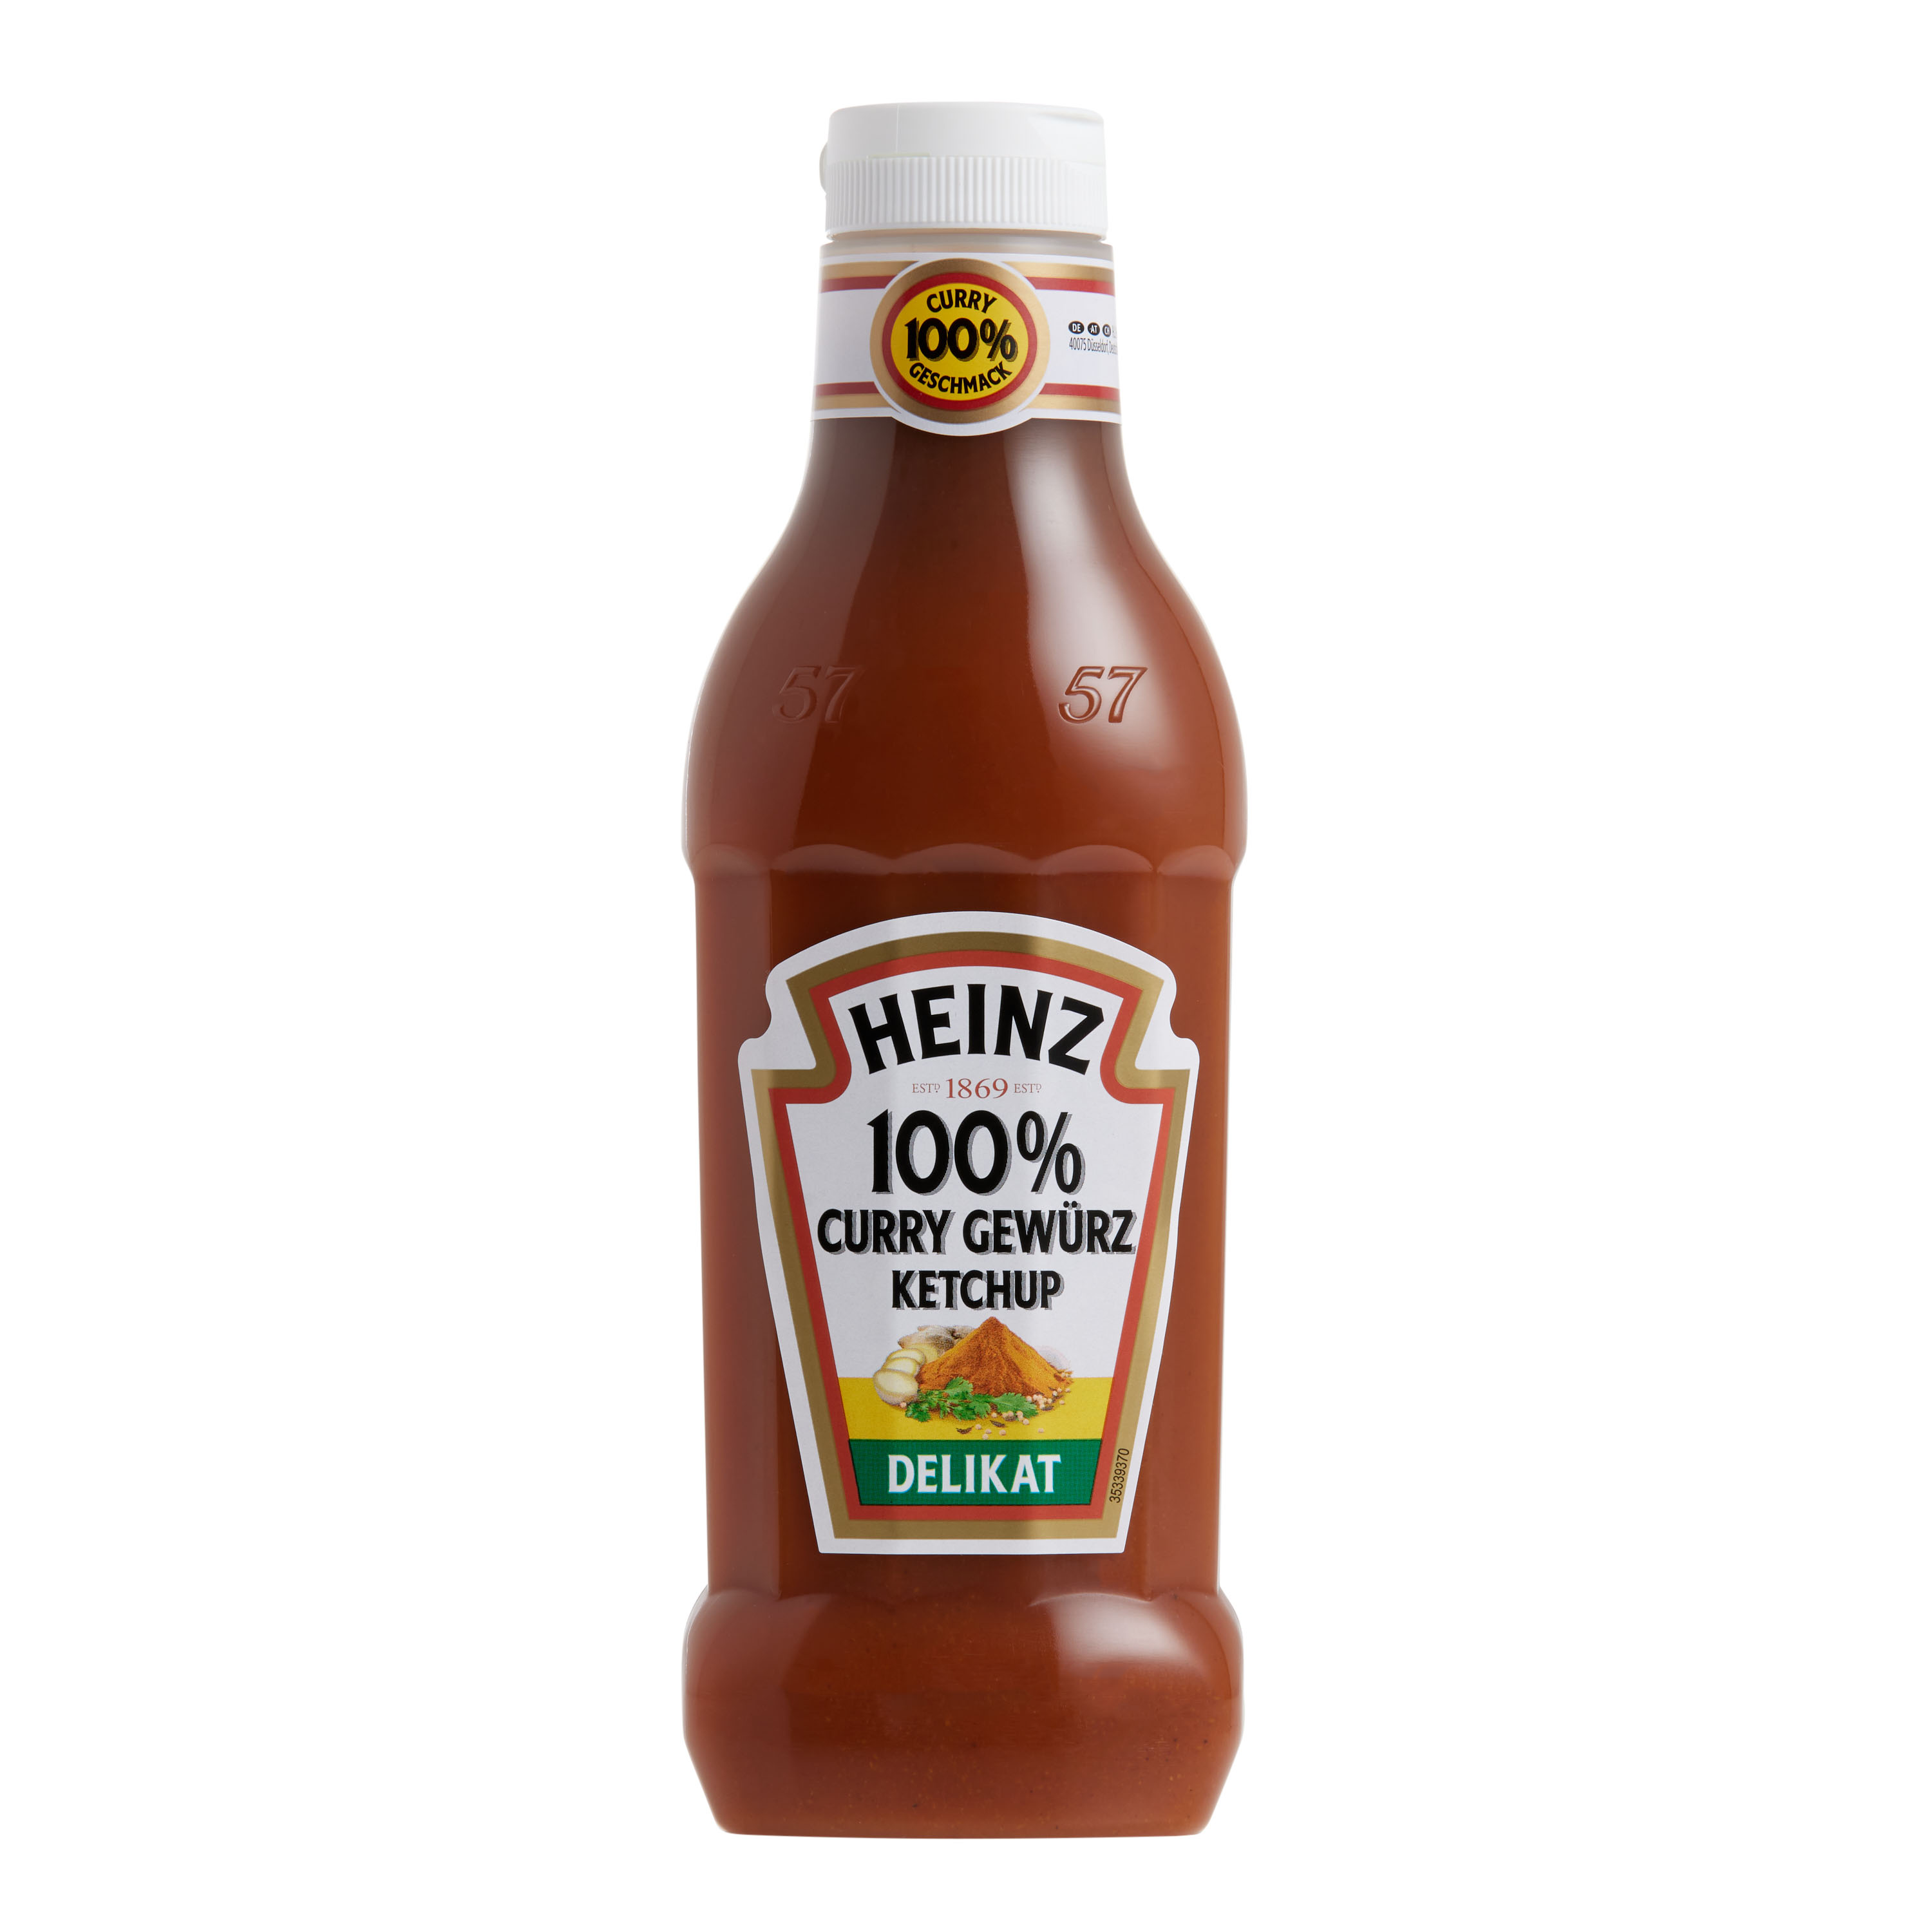 Homemade Heinz-style ketchup recipe